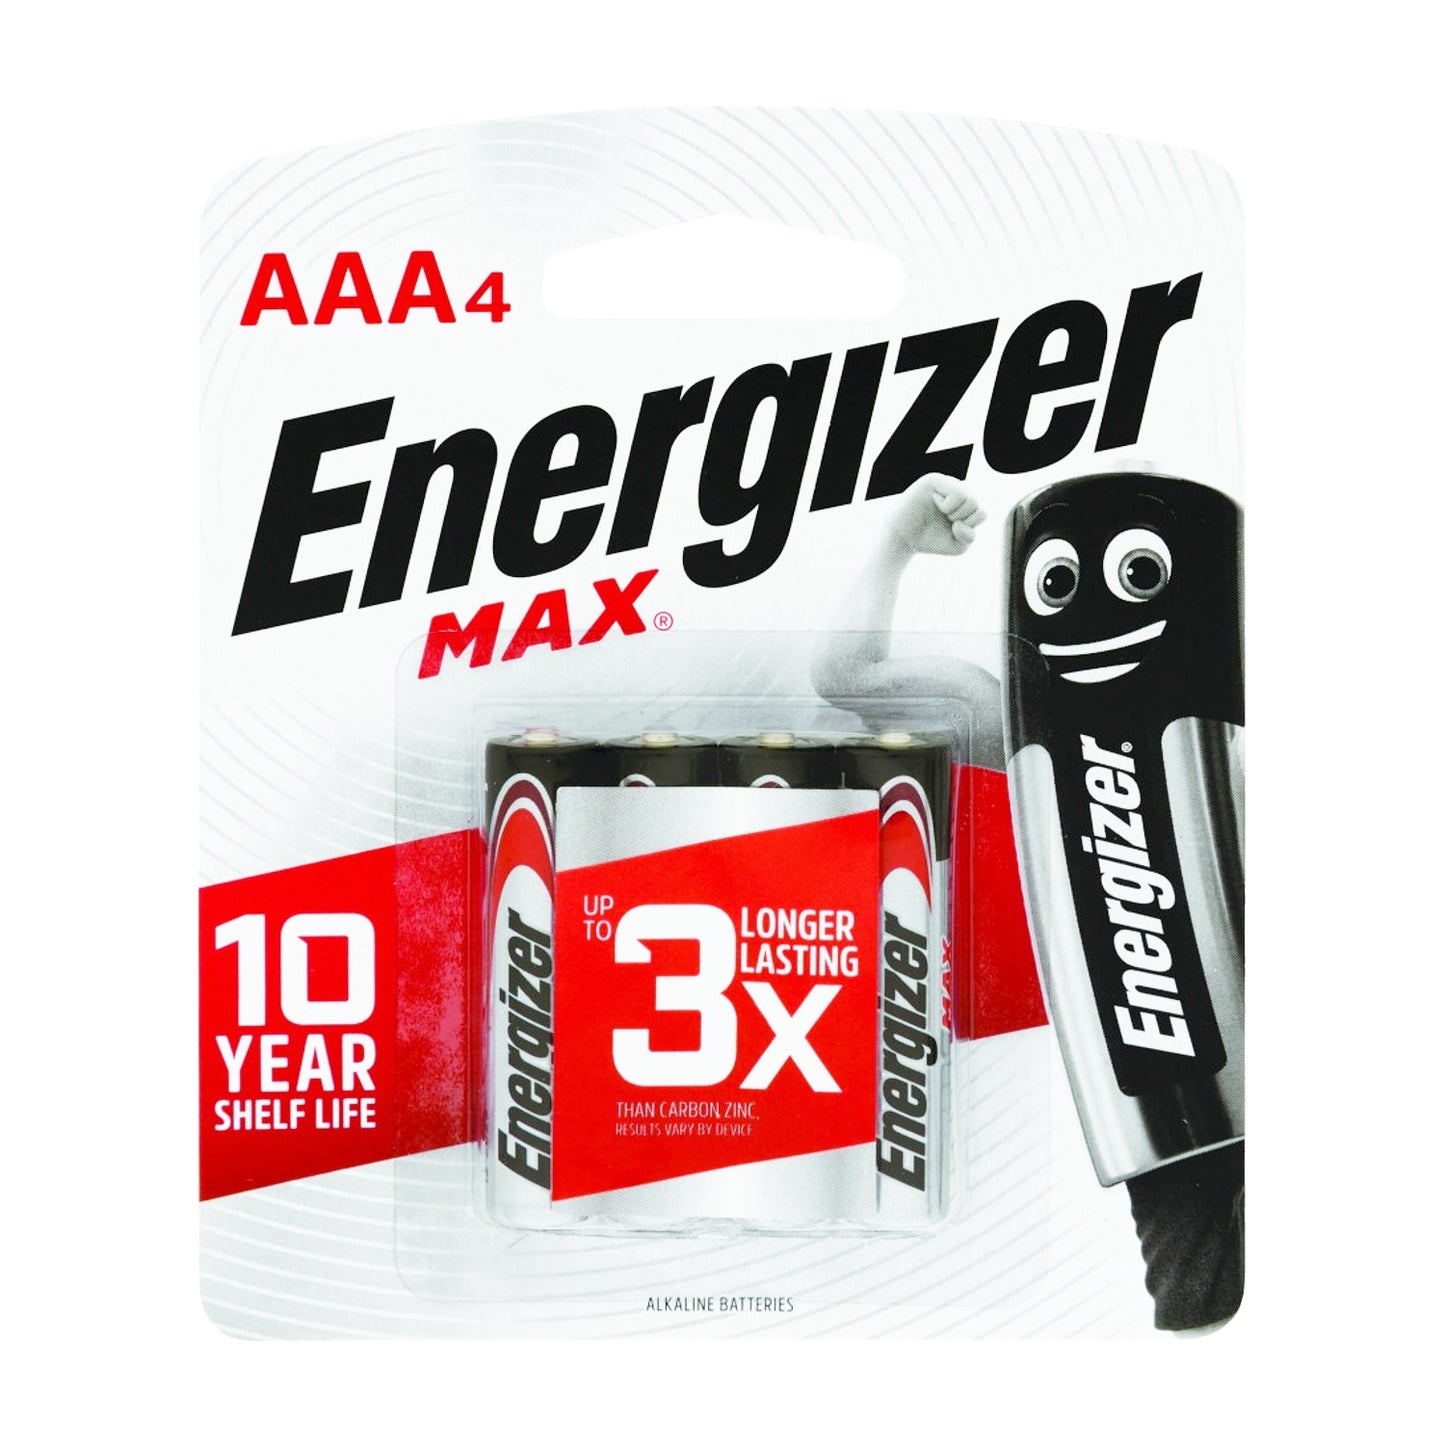 Energizer max aaa - 4 pack (moq 12)